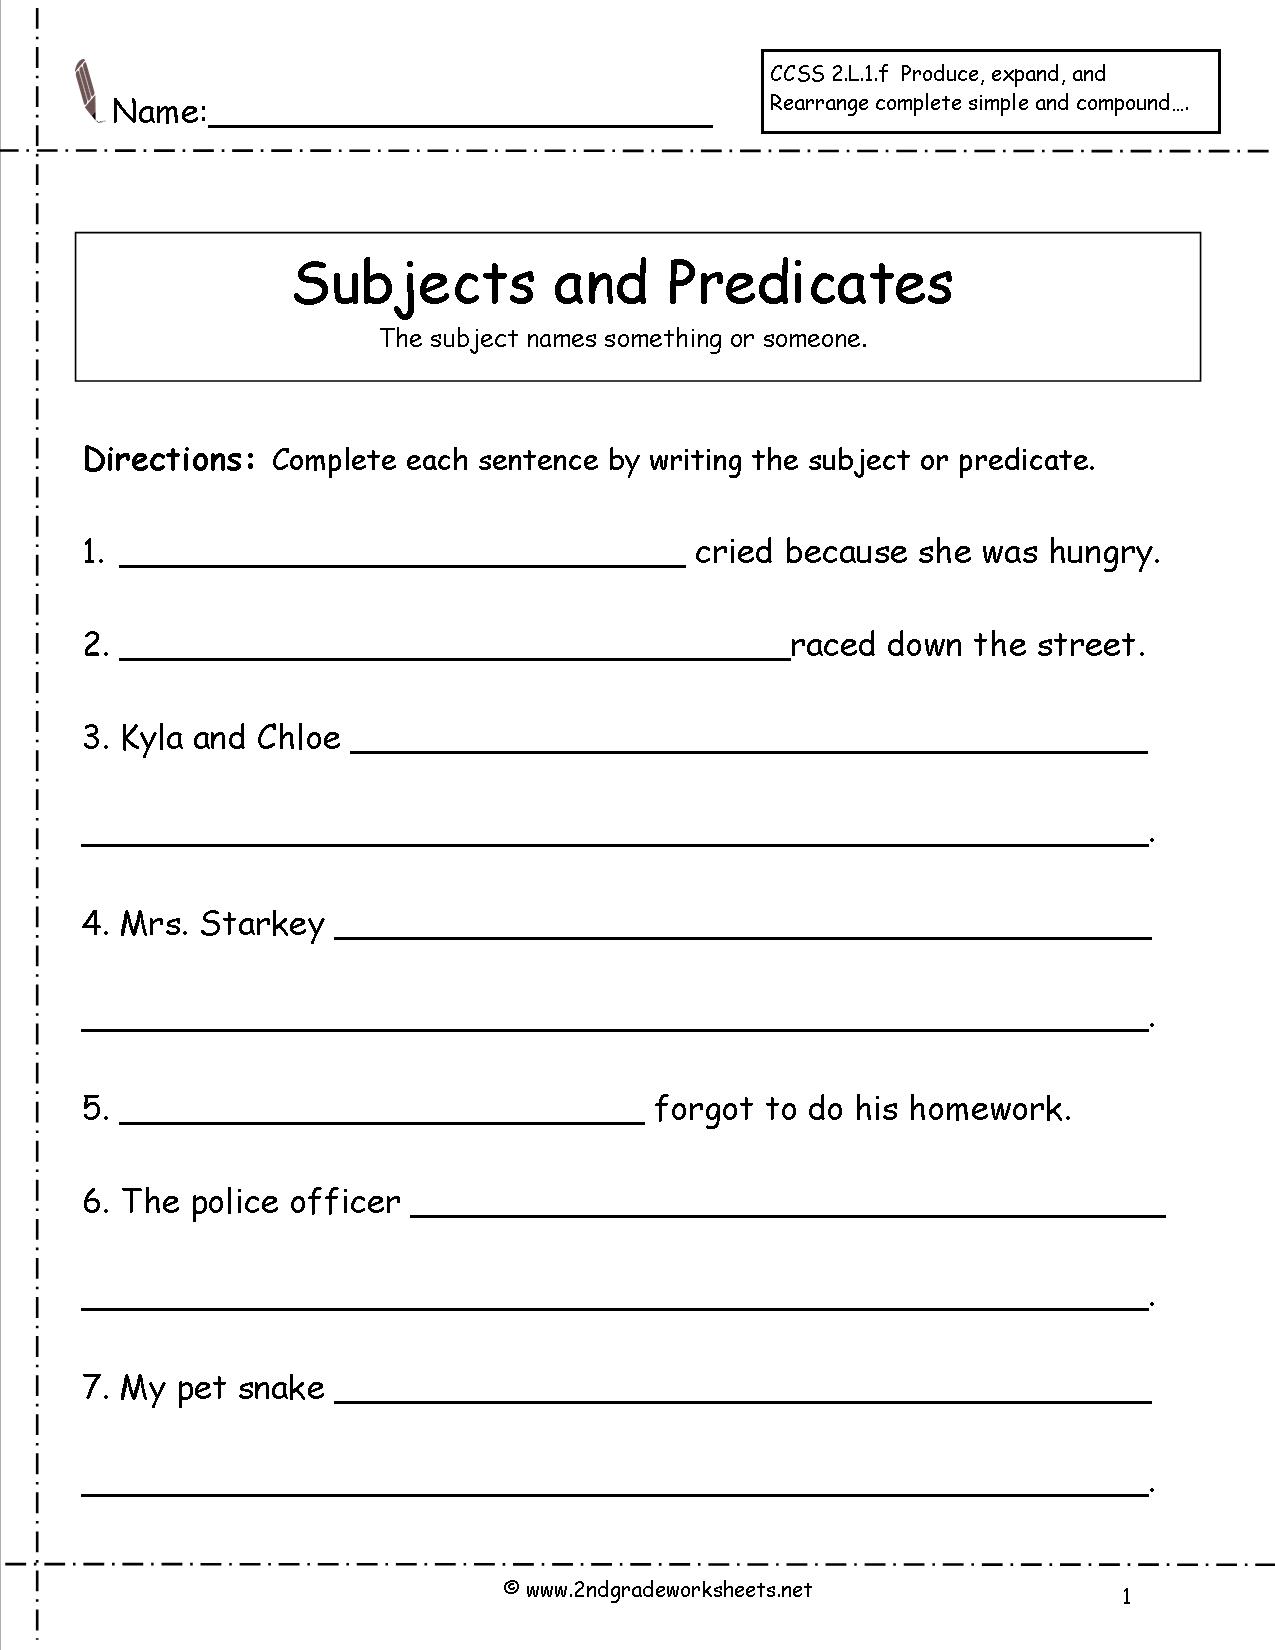 simple-subject-worksheet